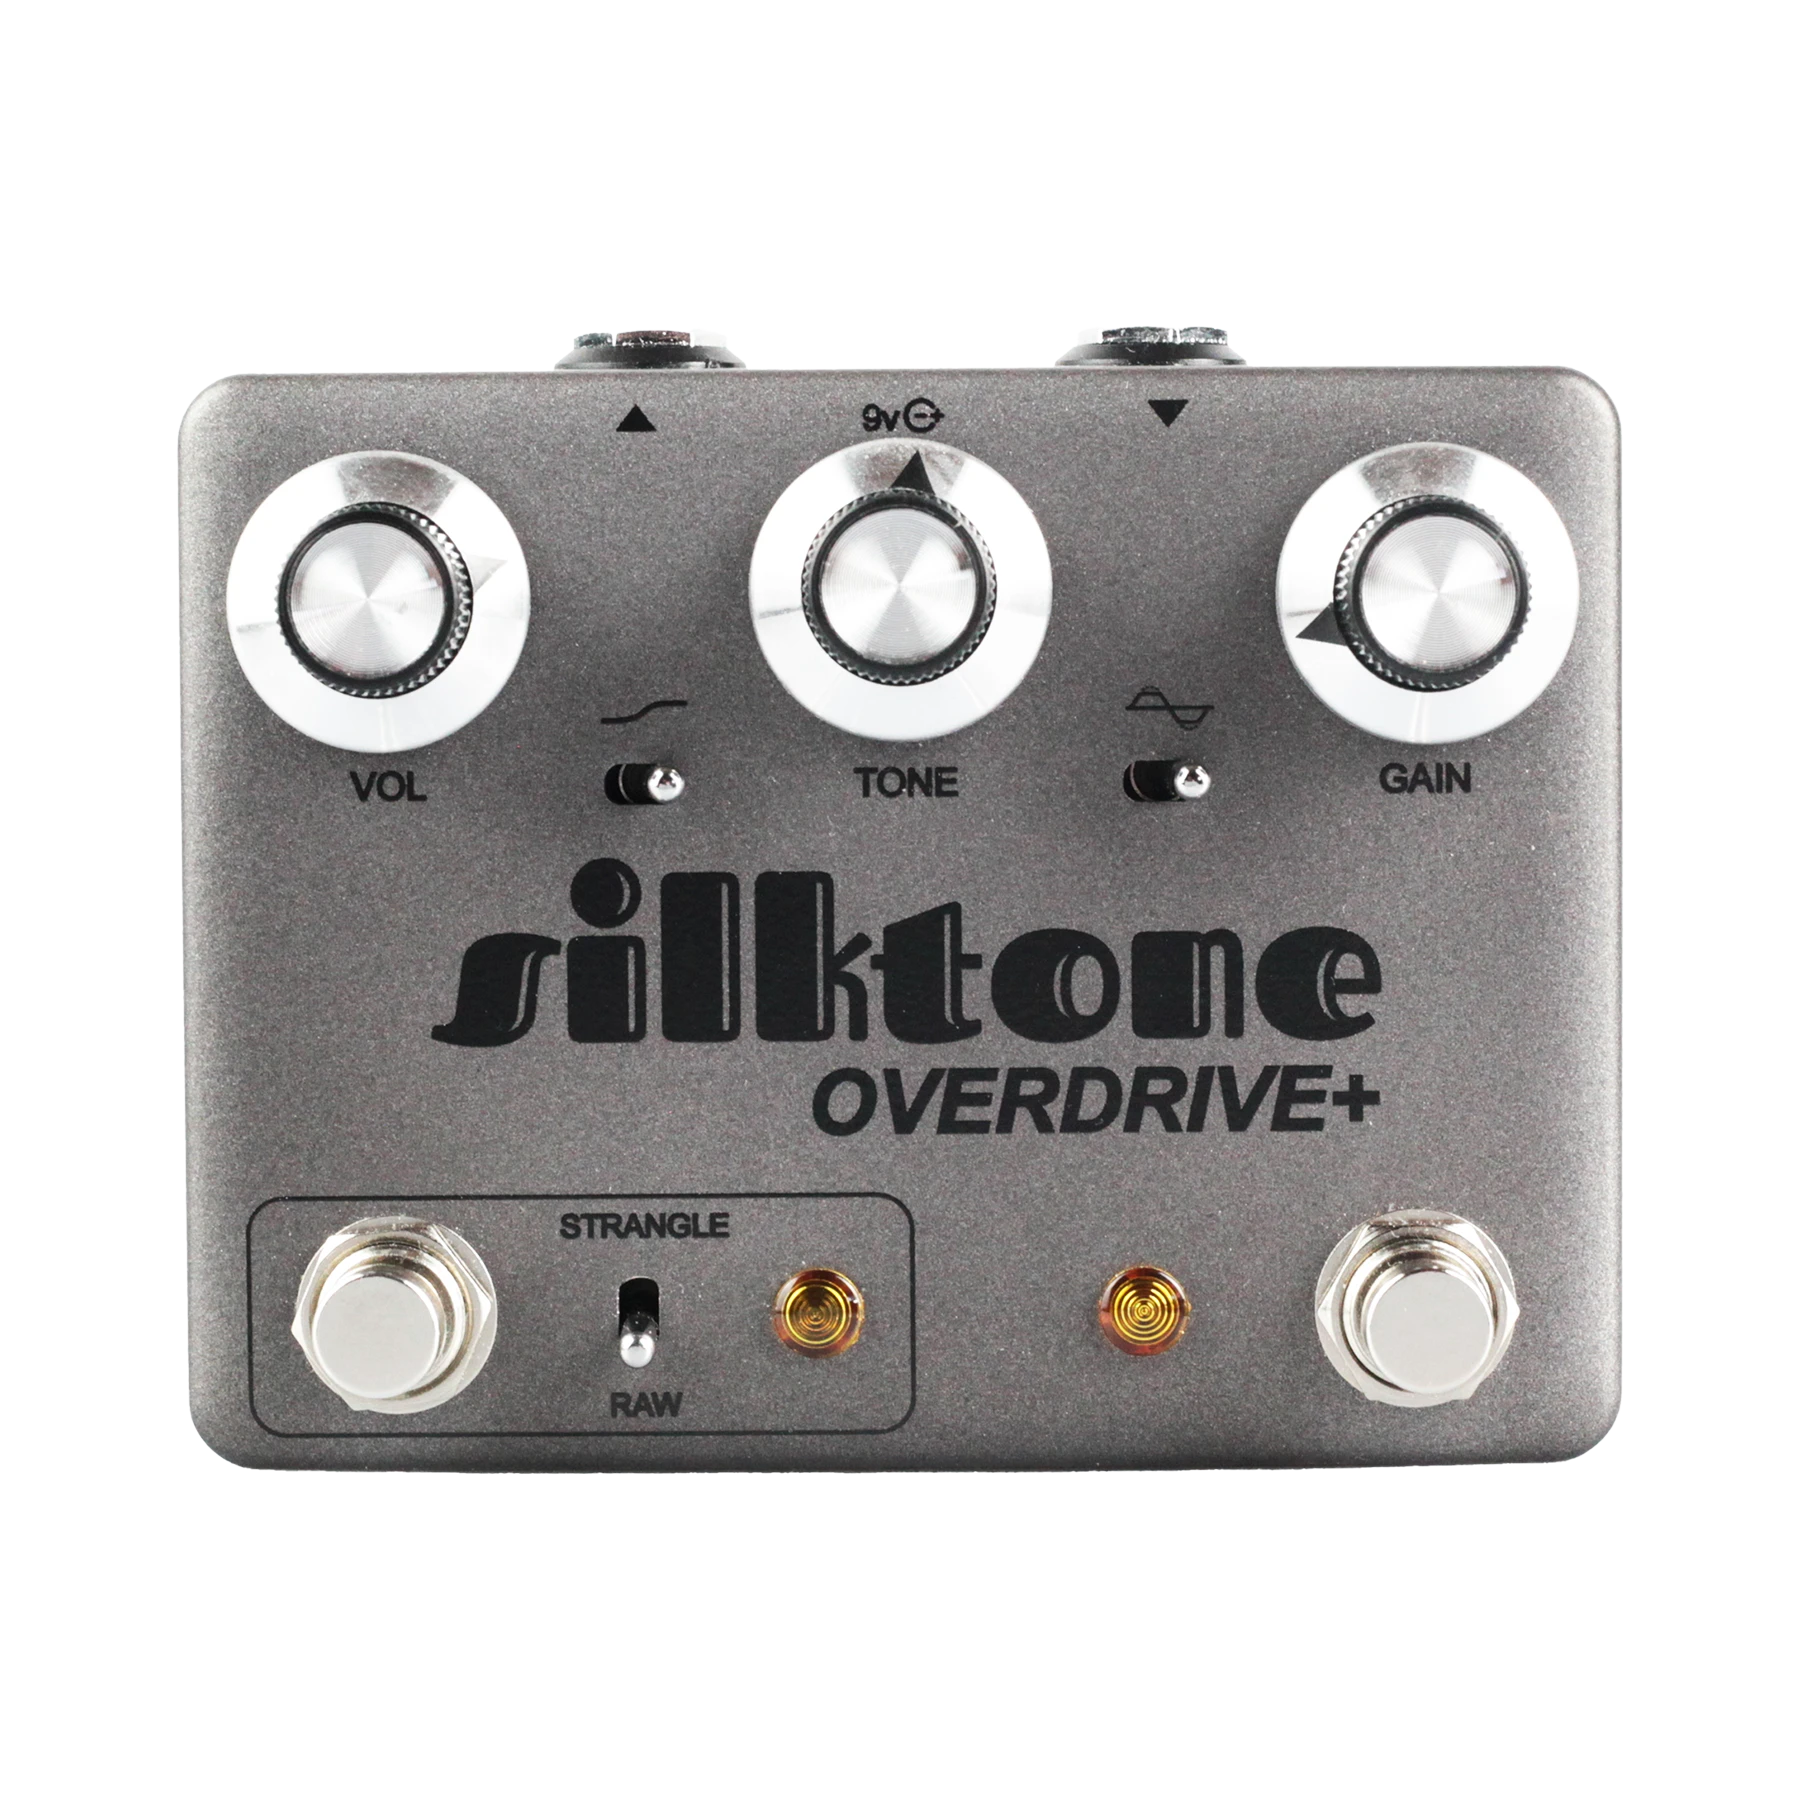 Silktone Overdrive+ dark